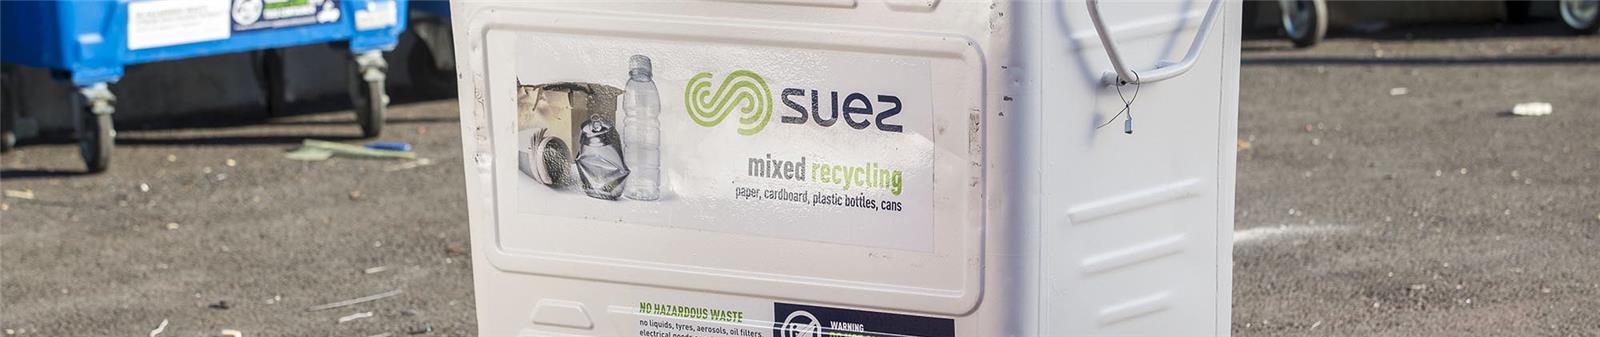 SUEZ RecyclingContainer Poole UK CW